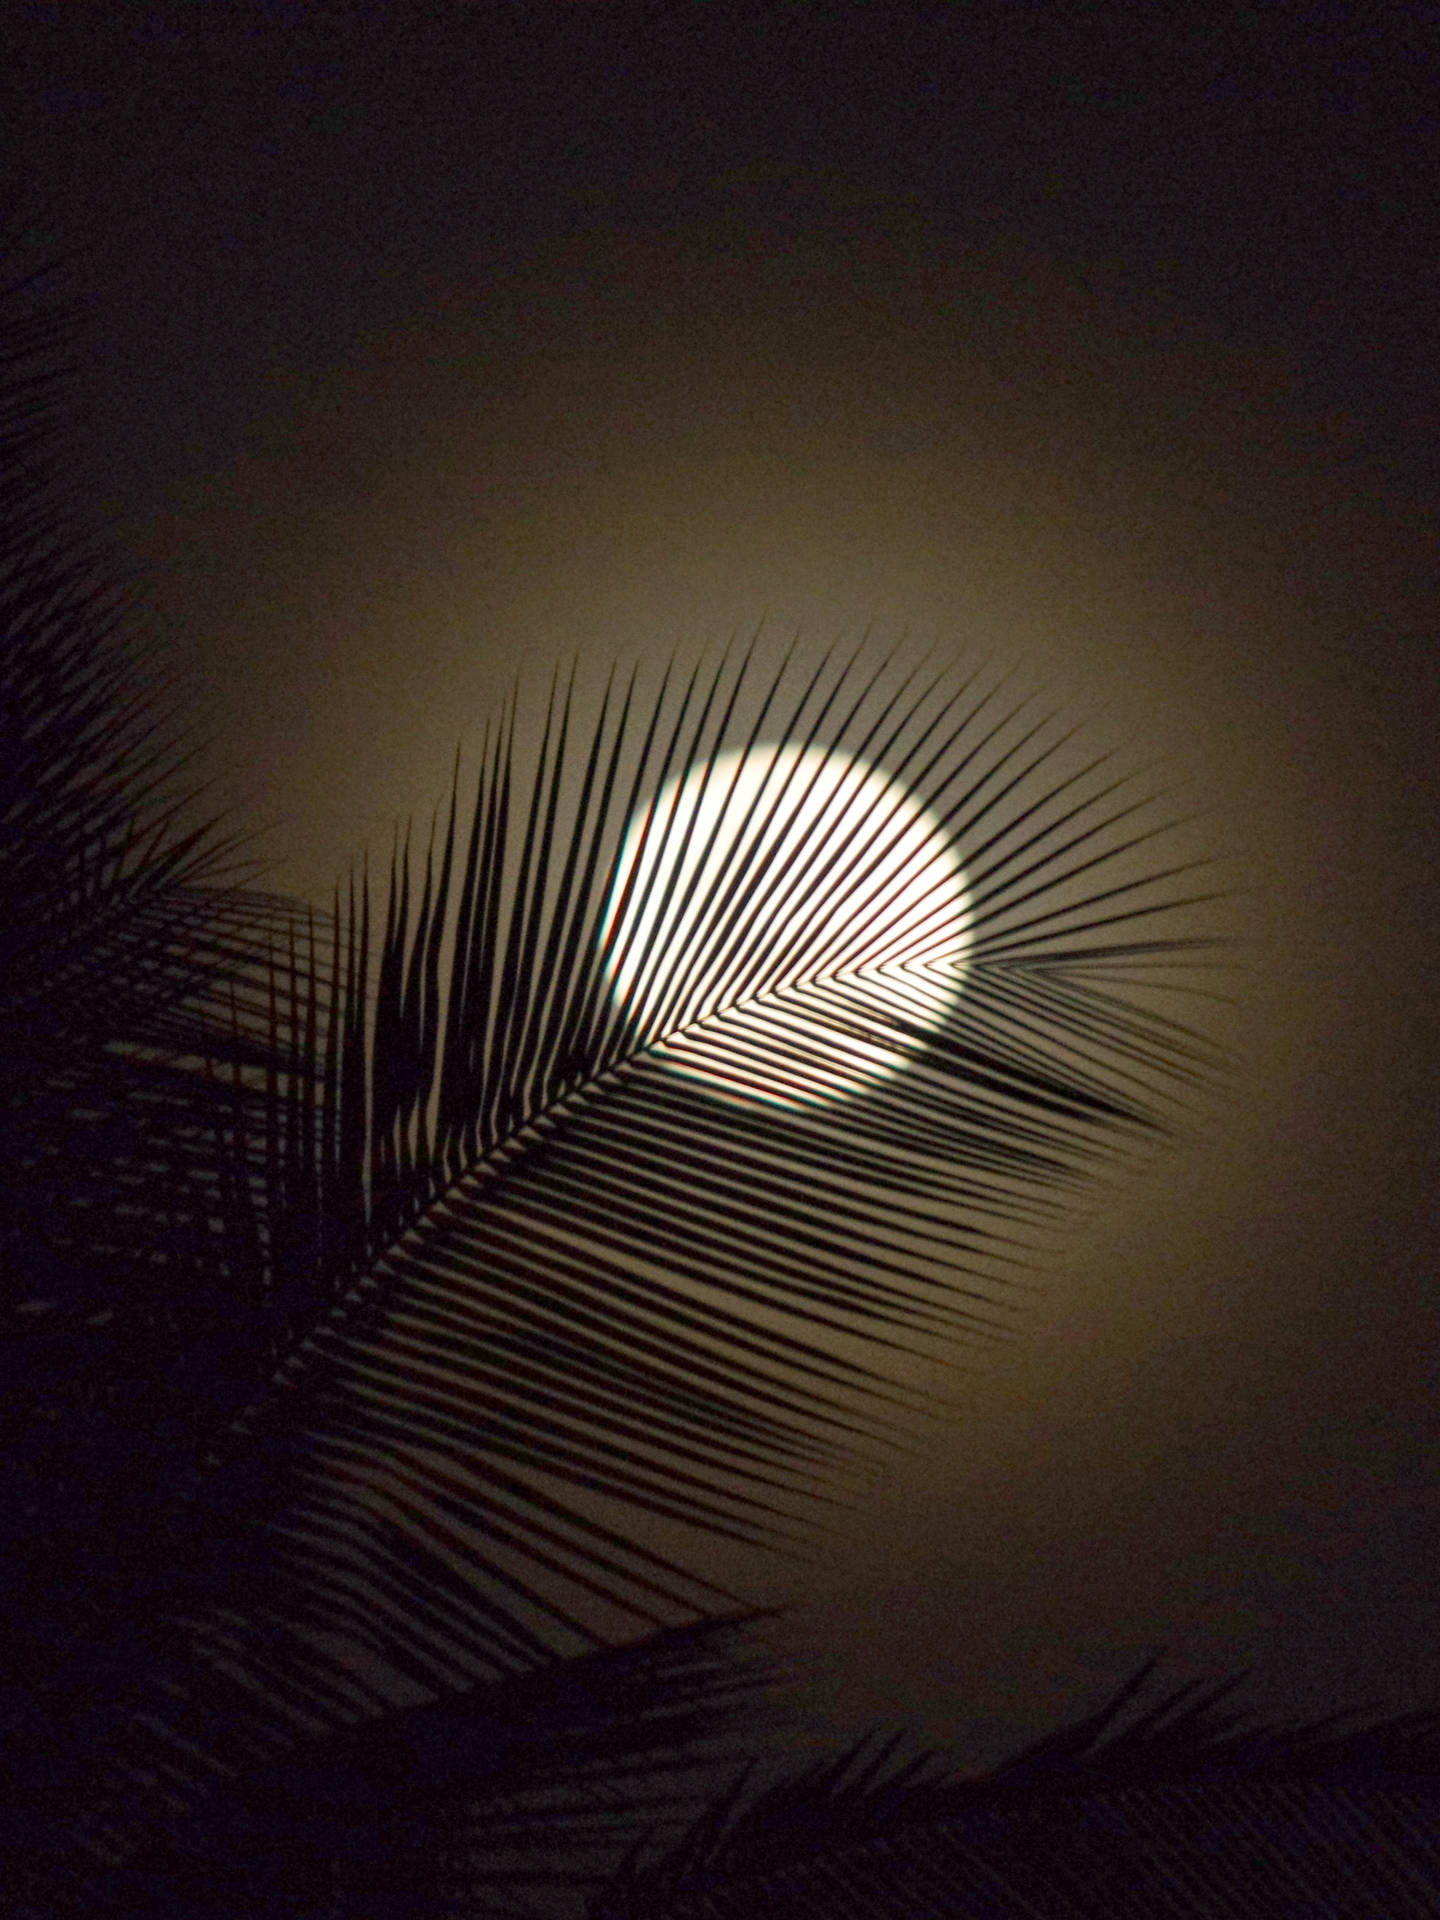 Hd Moon Behind Palm Leaves Wallpaper